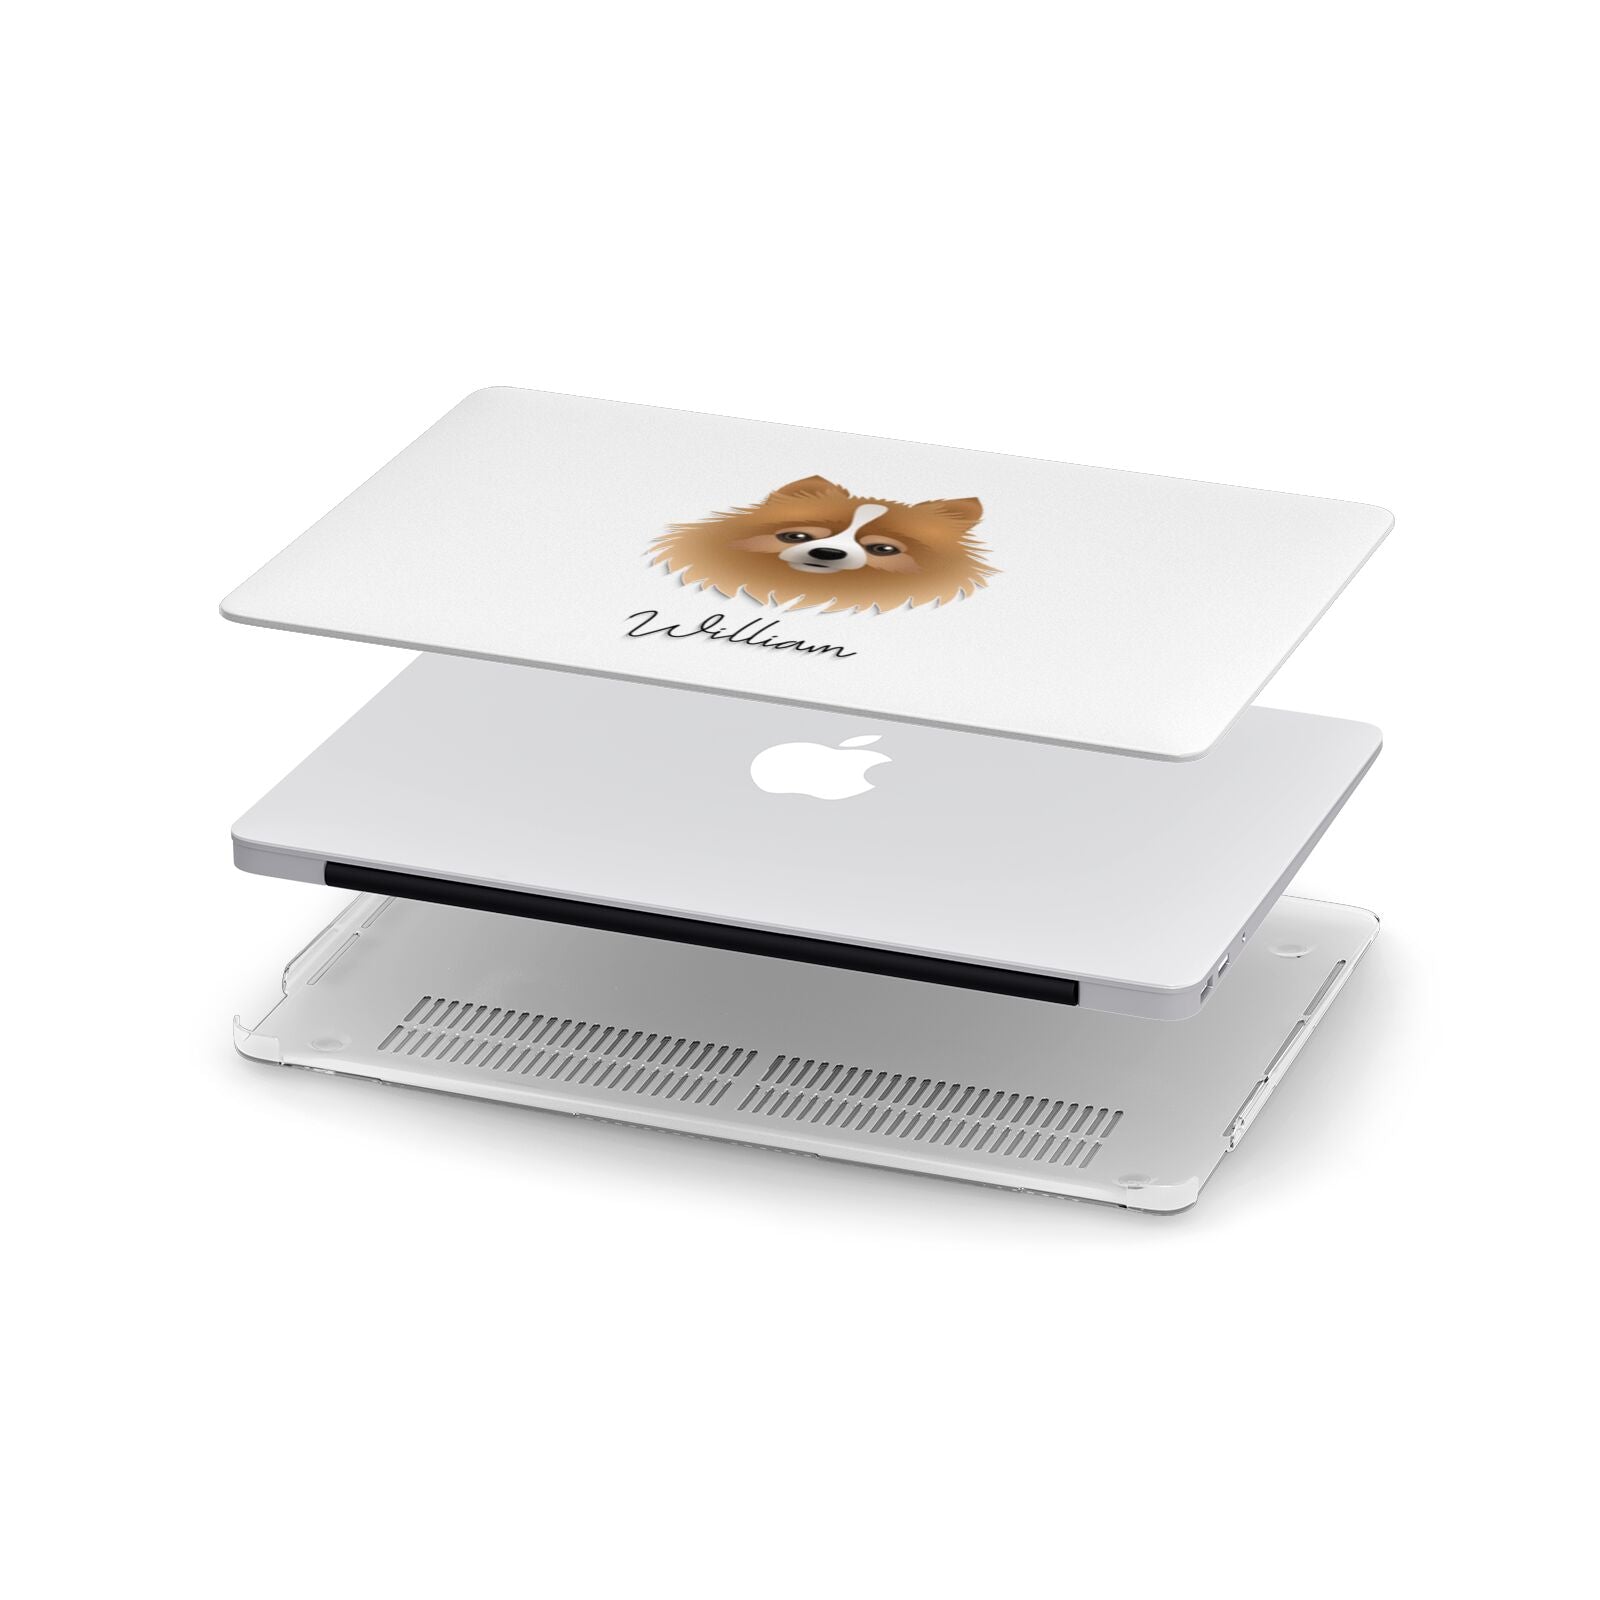 Pomchi Personalised Apple MacBook Case in Detail